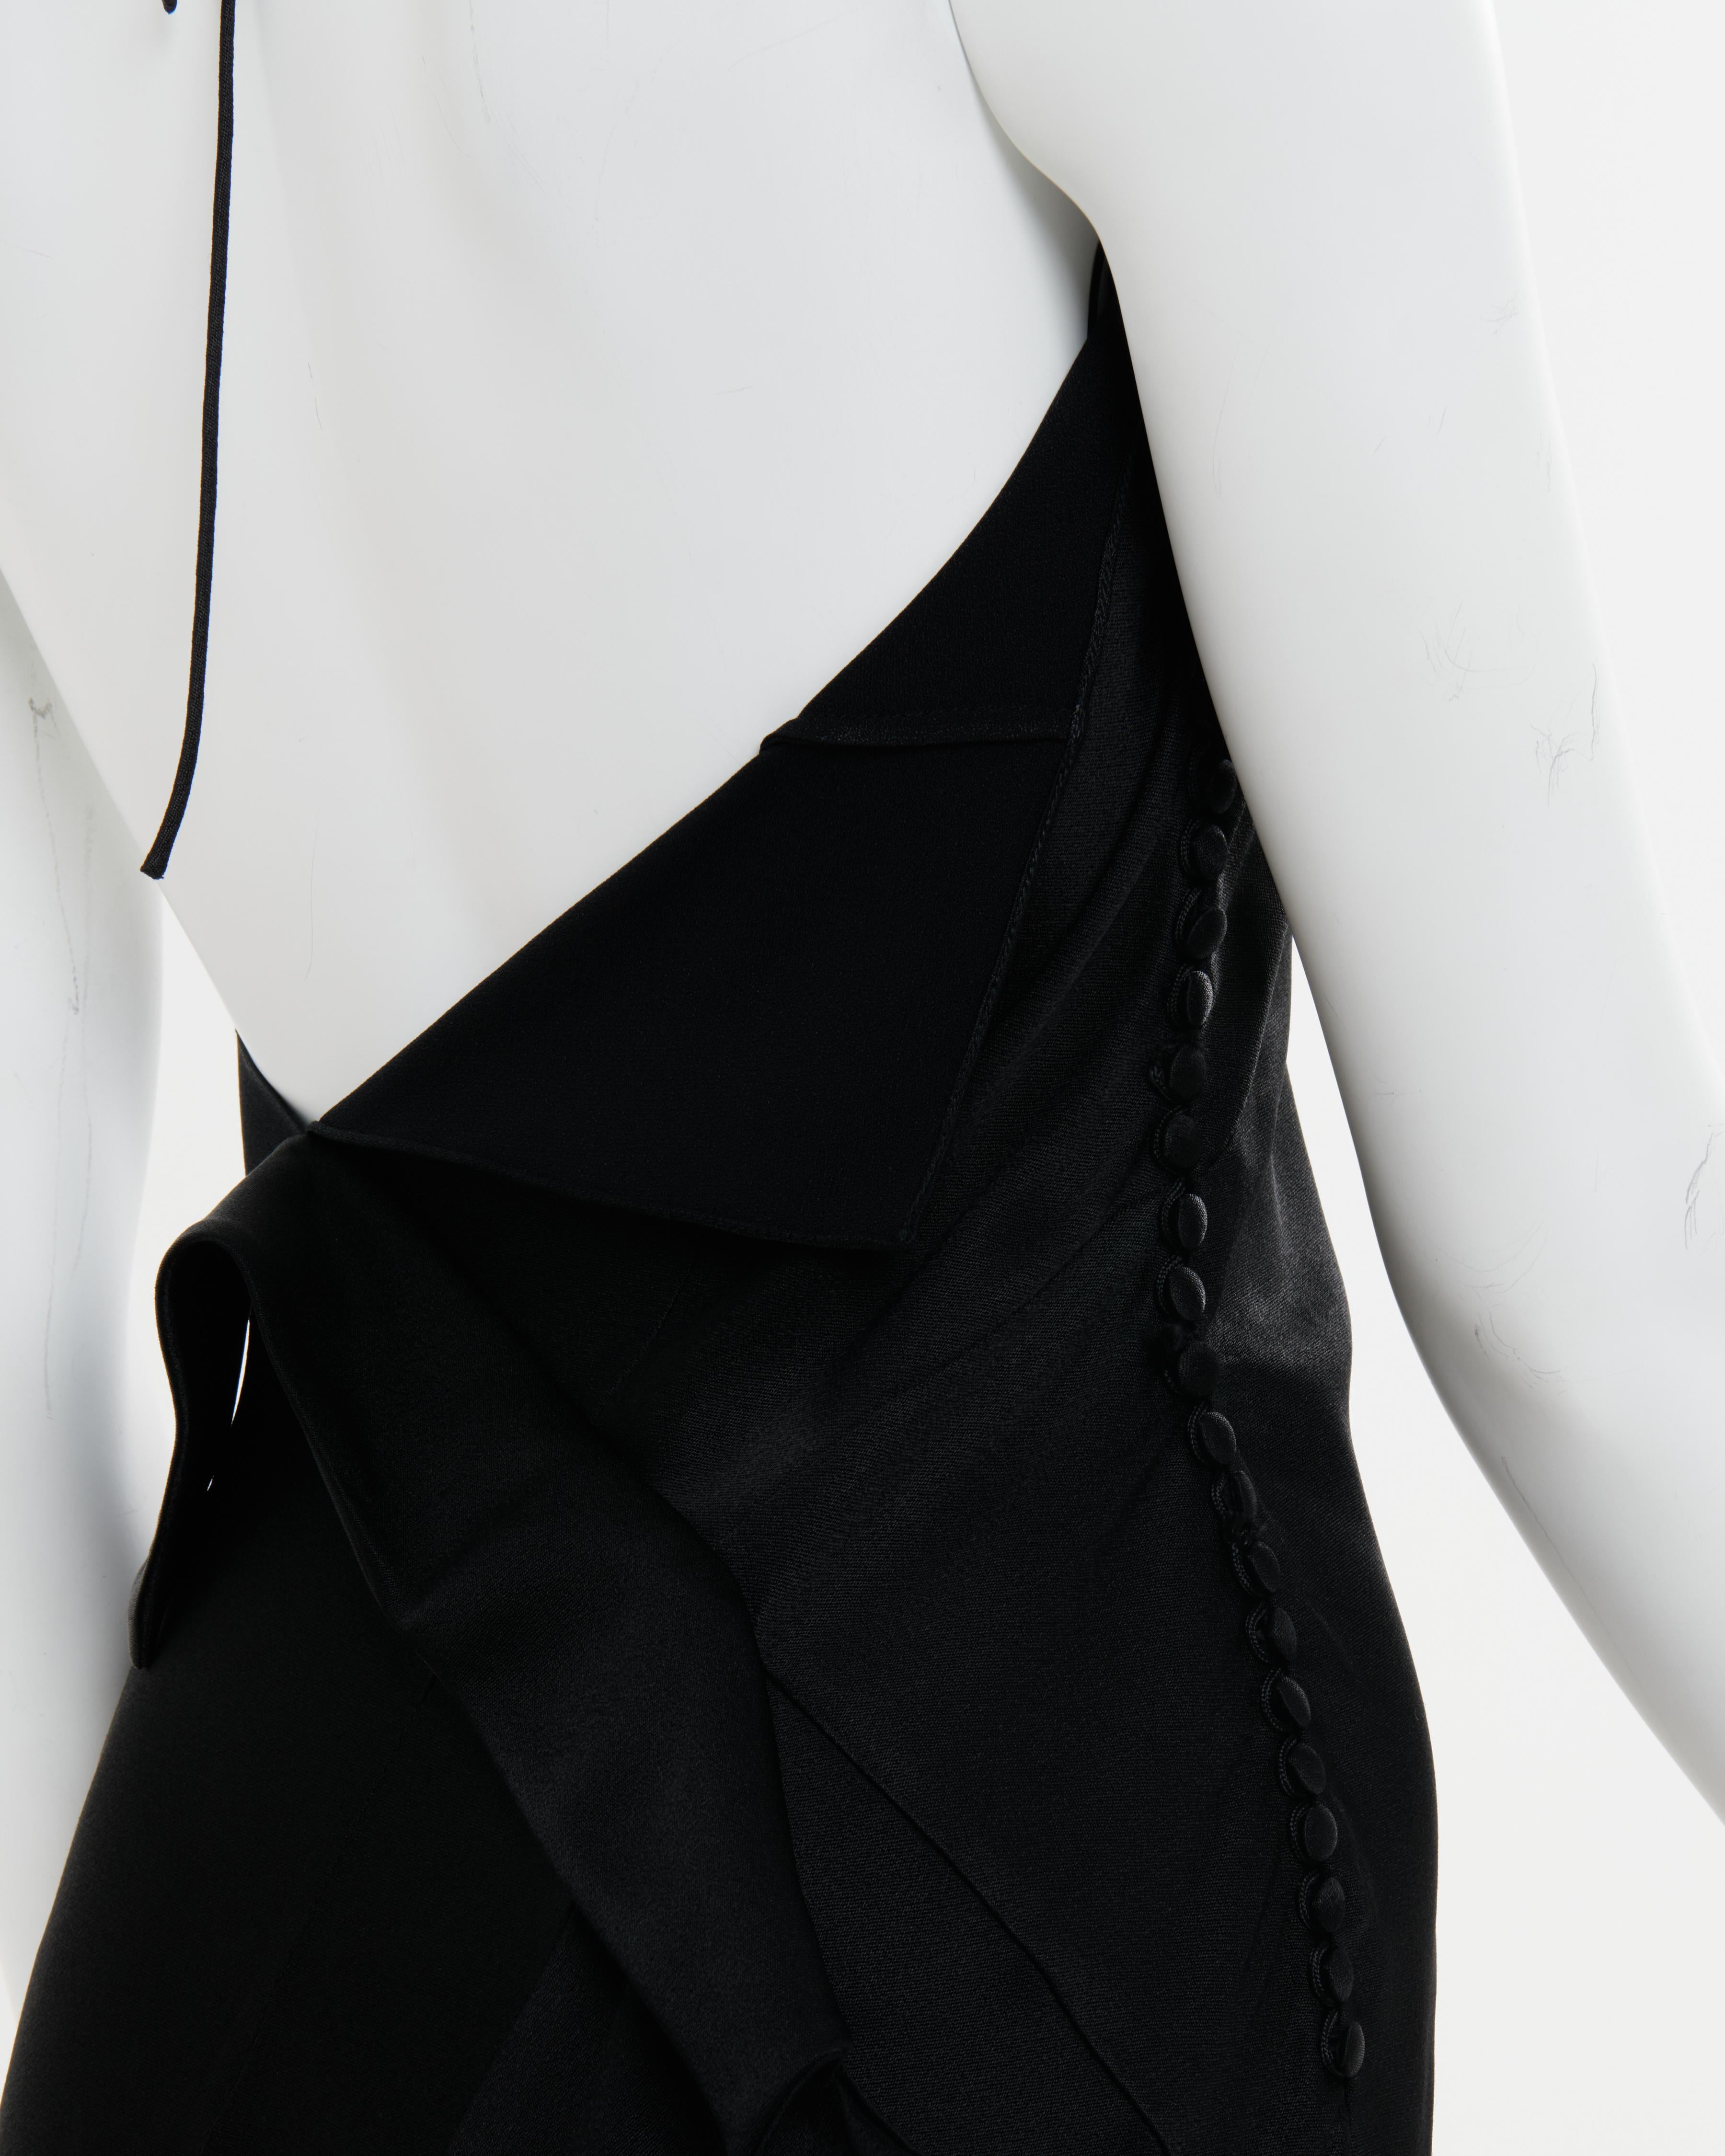 Christian Dior by John Galliano F/W 2000 Black bias-cut trained evening dress For Sale 5